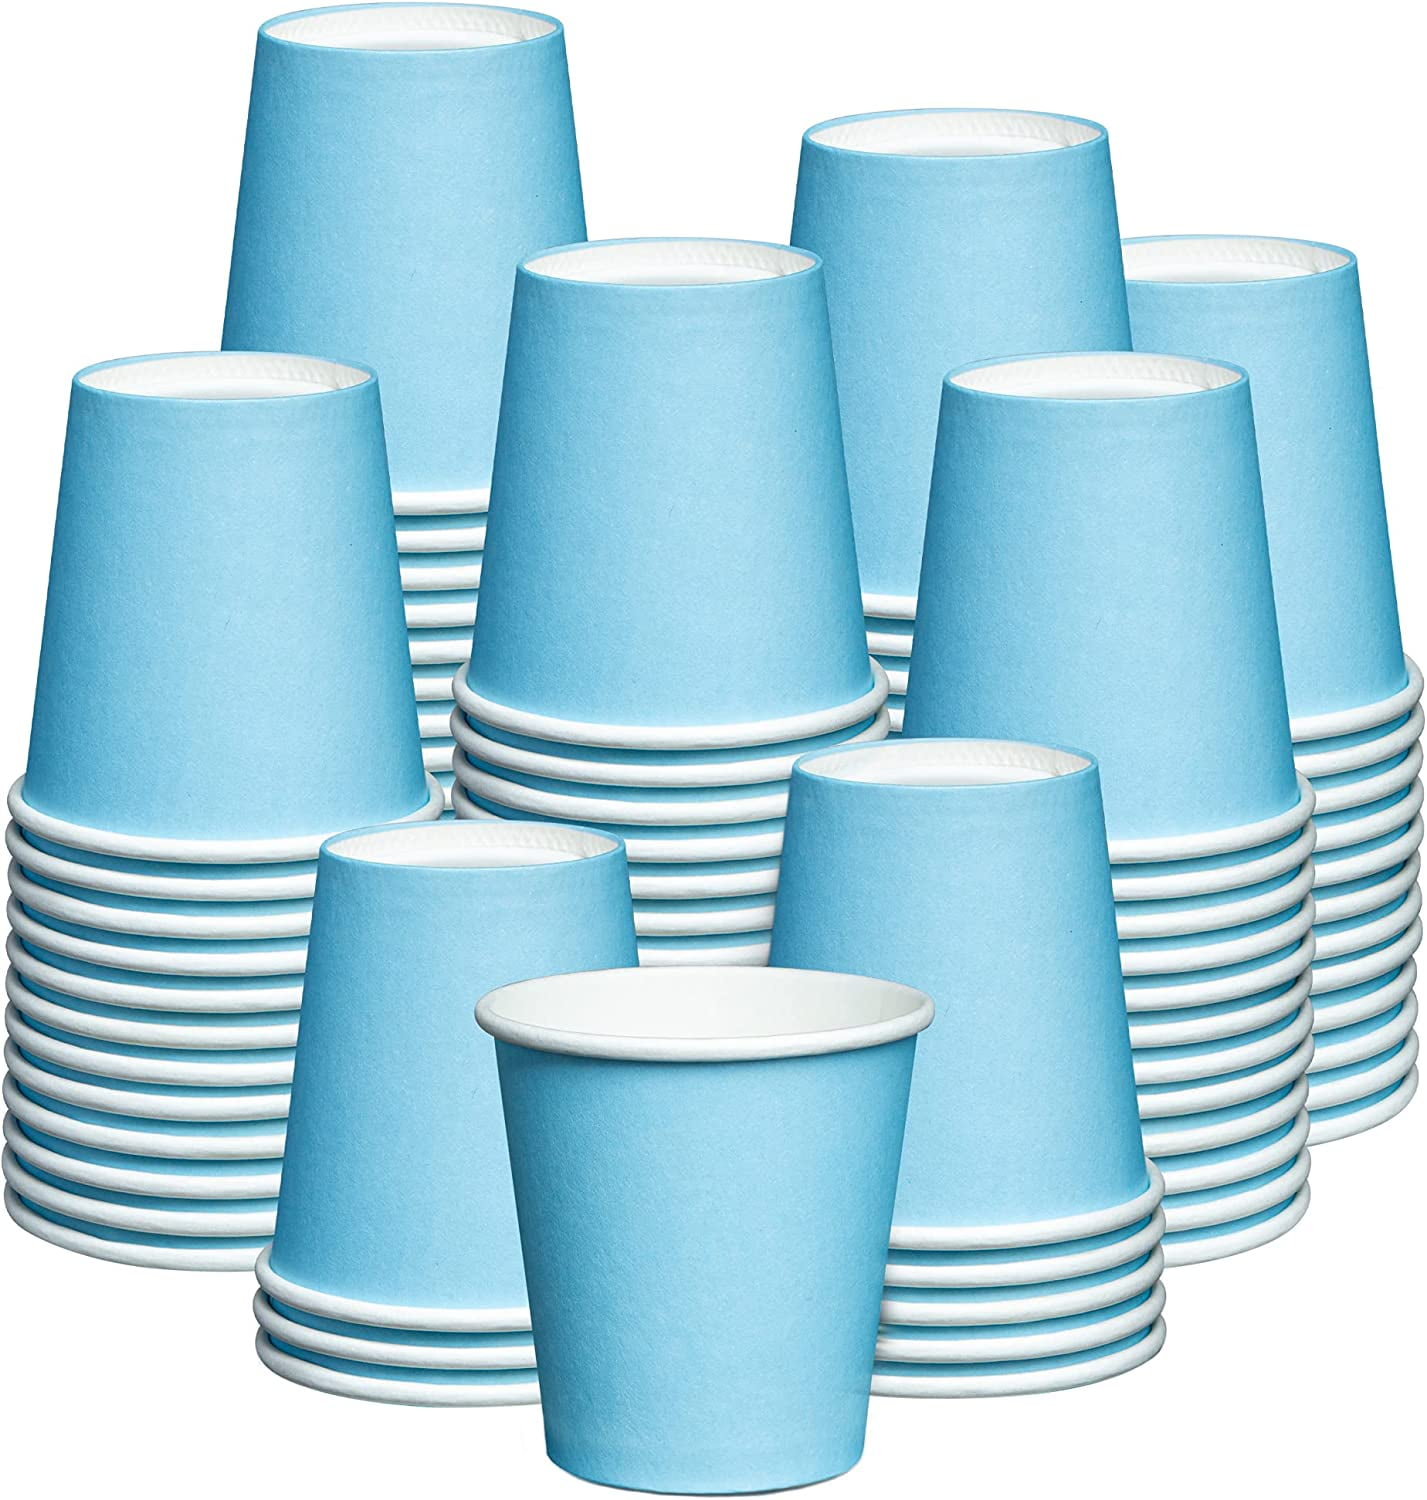 Demitasse Cups (1oz-3oz)